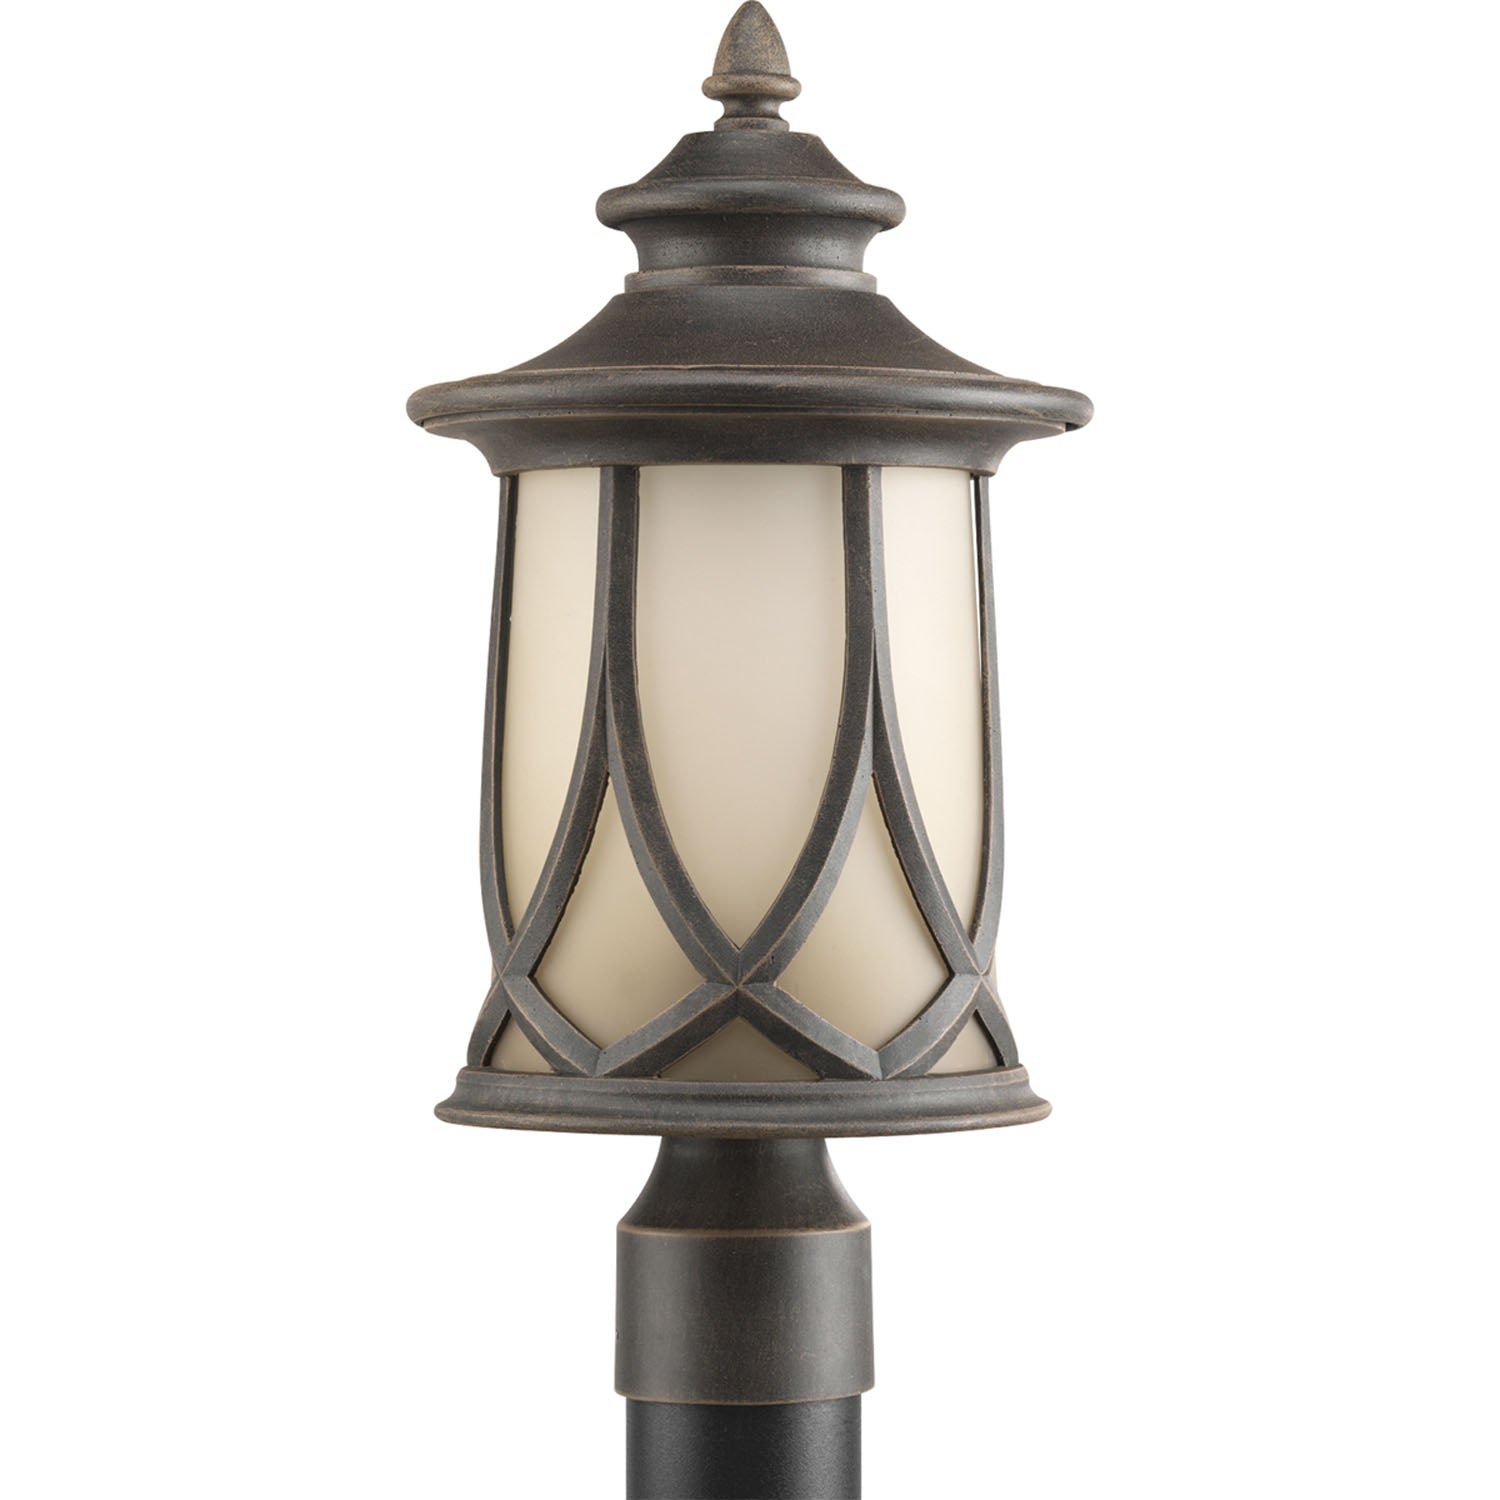 Progress Canada - One Light Post Lantern - Resort - Aged Copper- Union Lighting Luminaires Decor